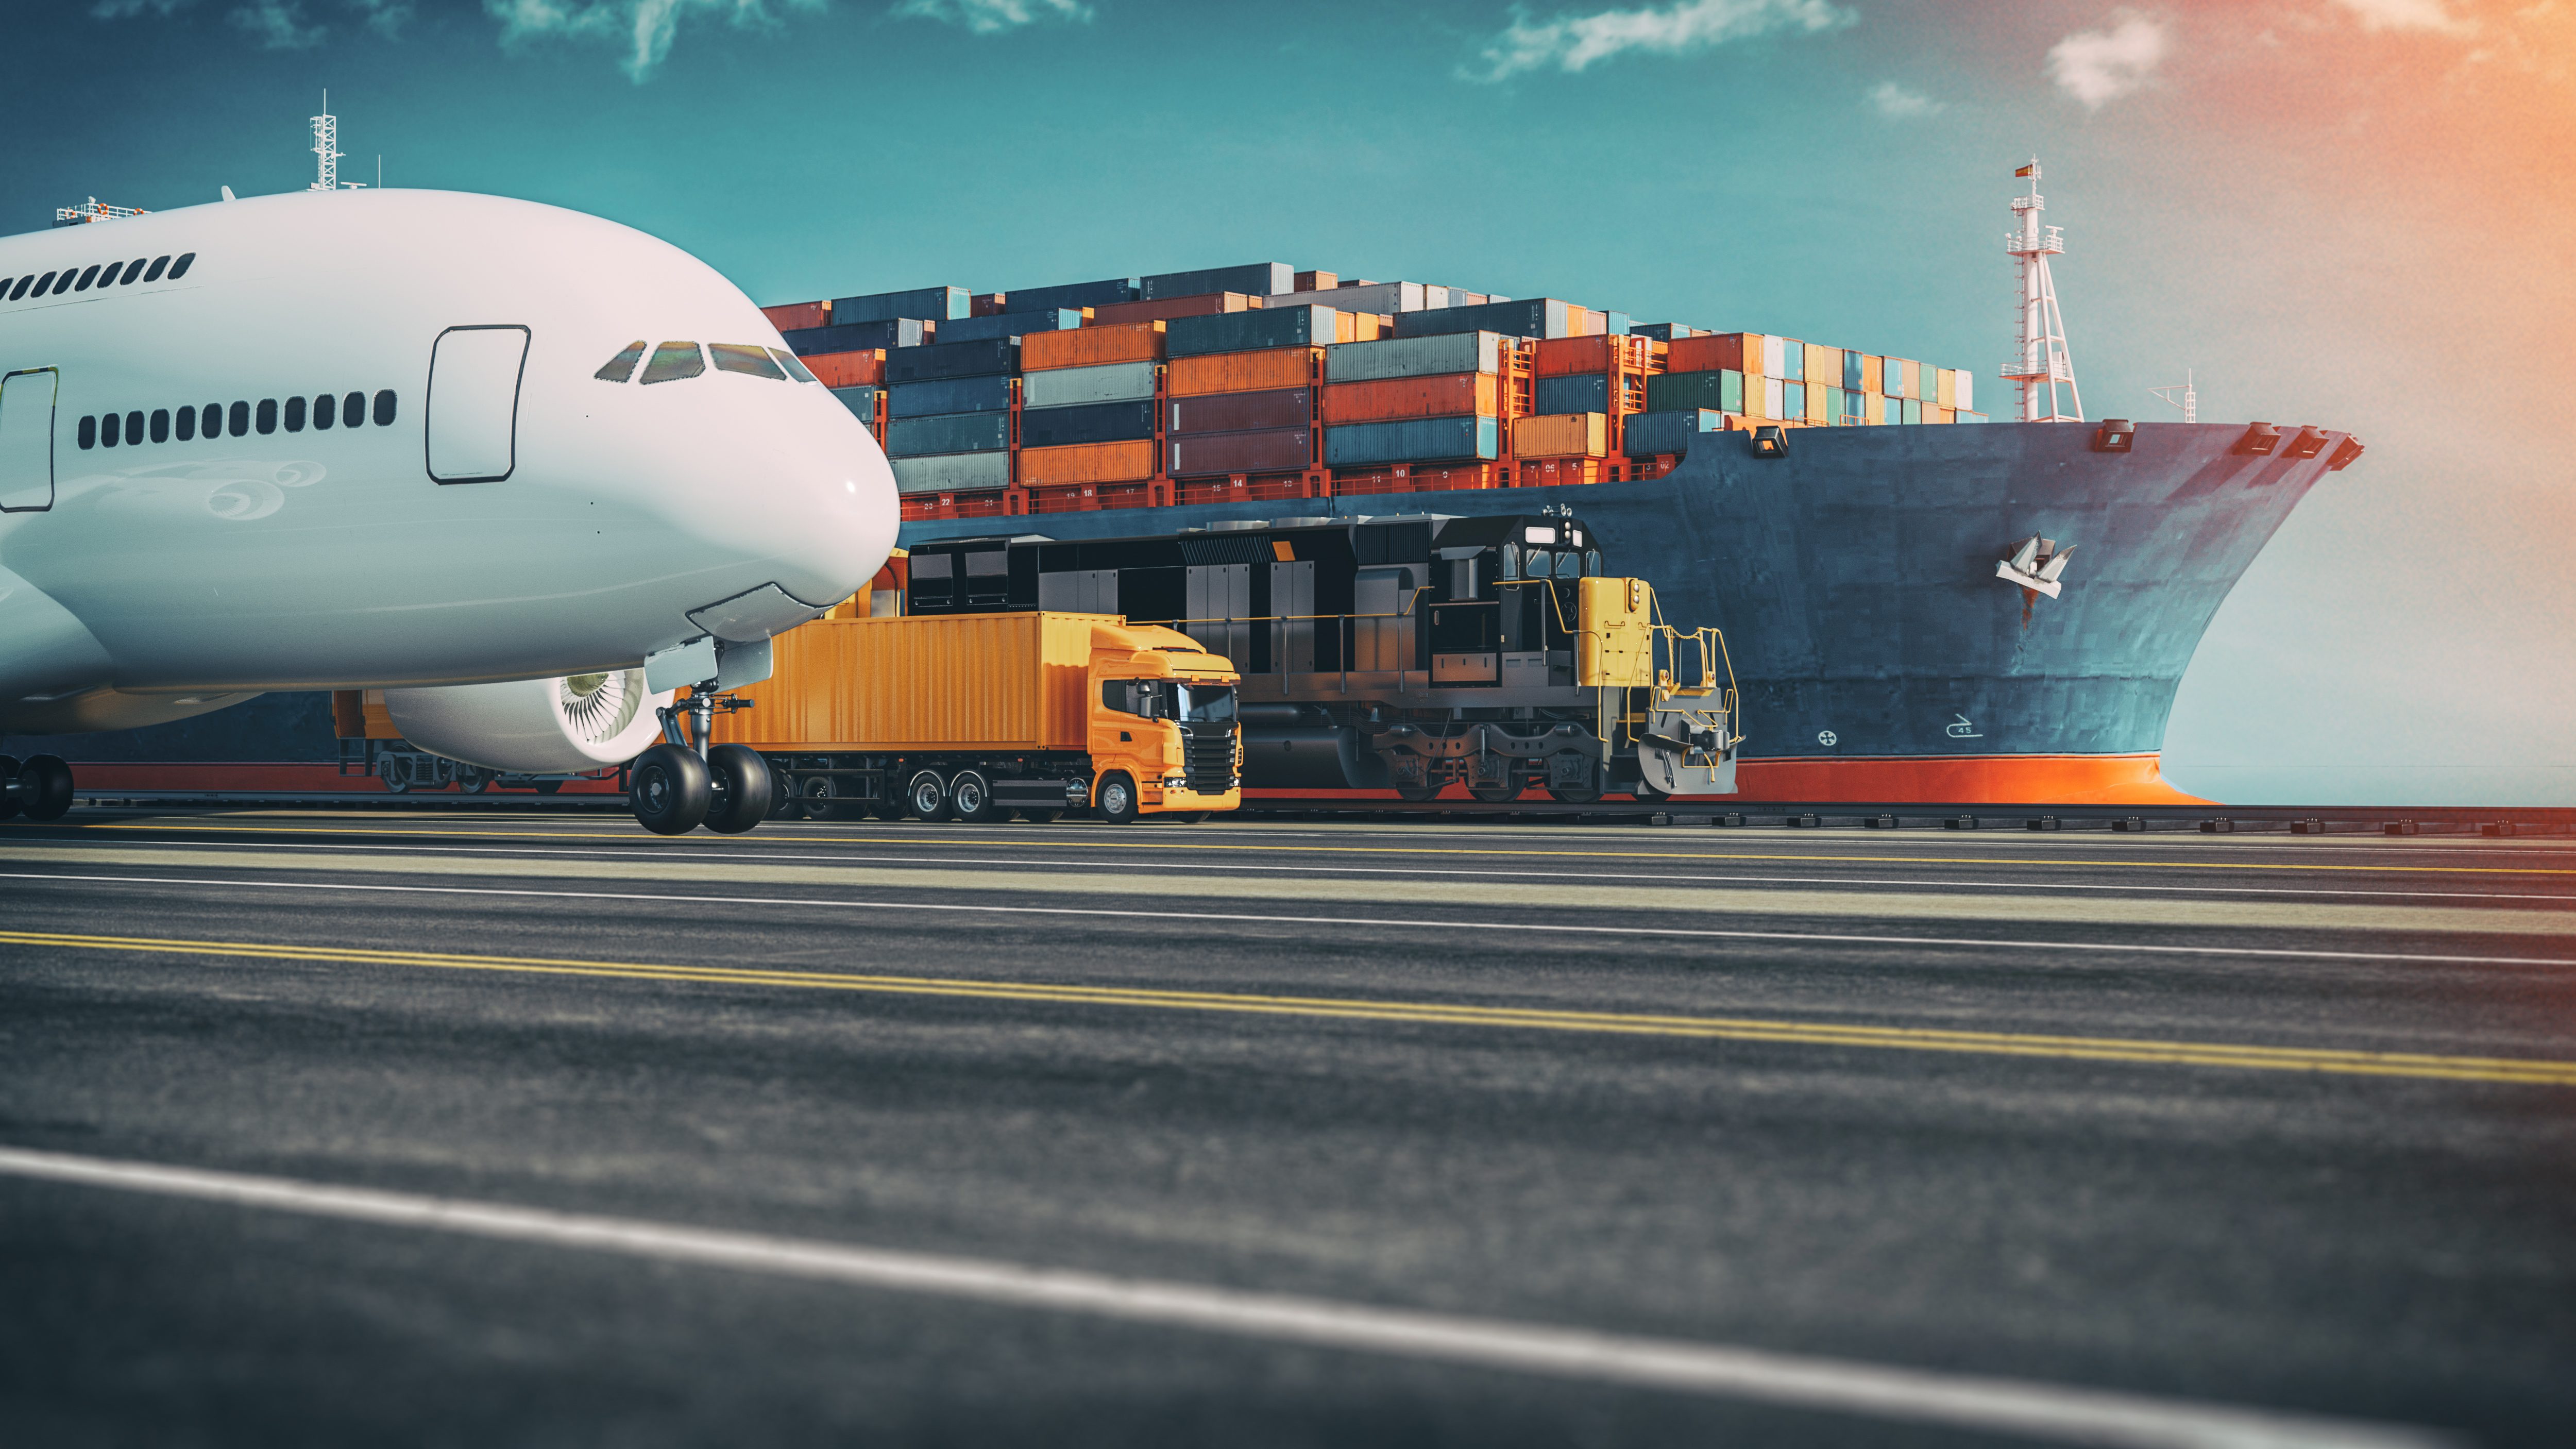 Transportation and logistics of Container Cargo Ship, Cargo Truck, Cargo Rail, and Cargo Plane.